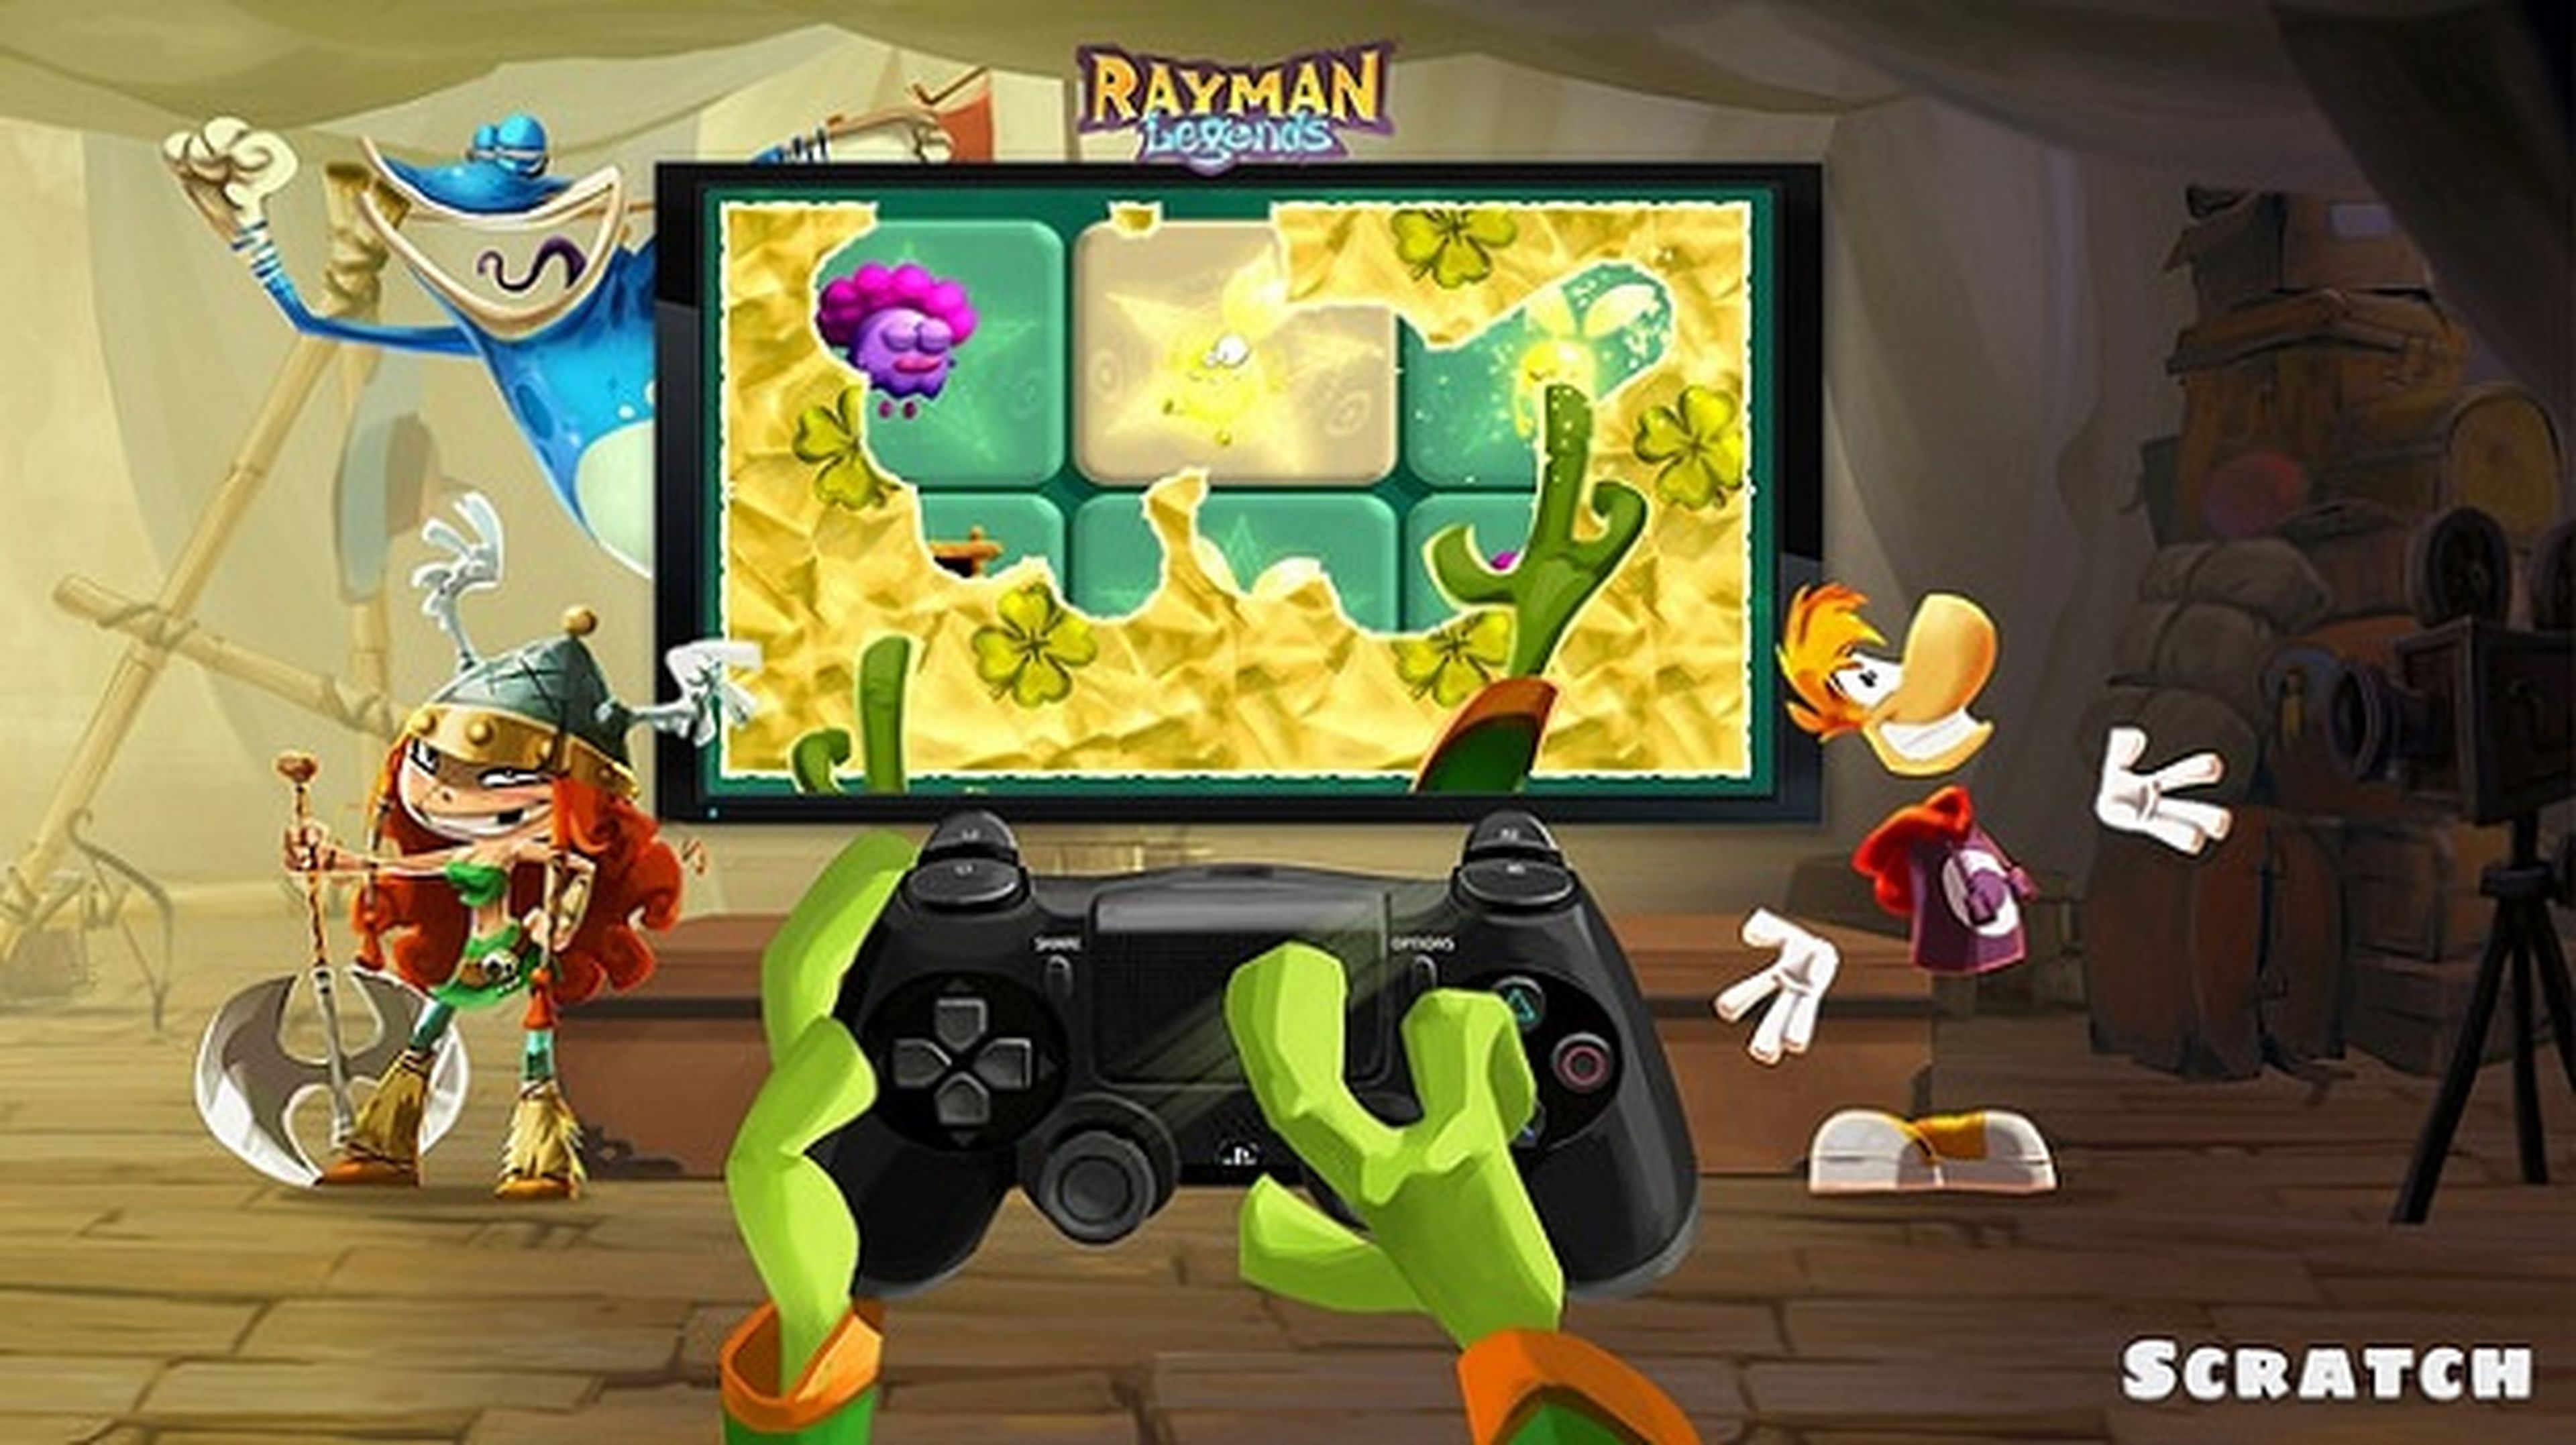 Las novedades de Rayman Legends en PS4